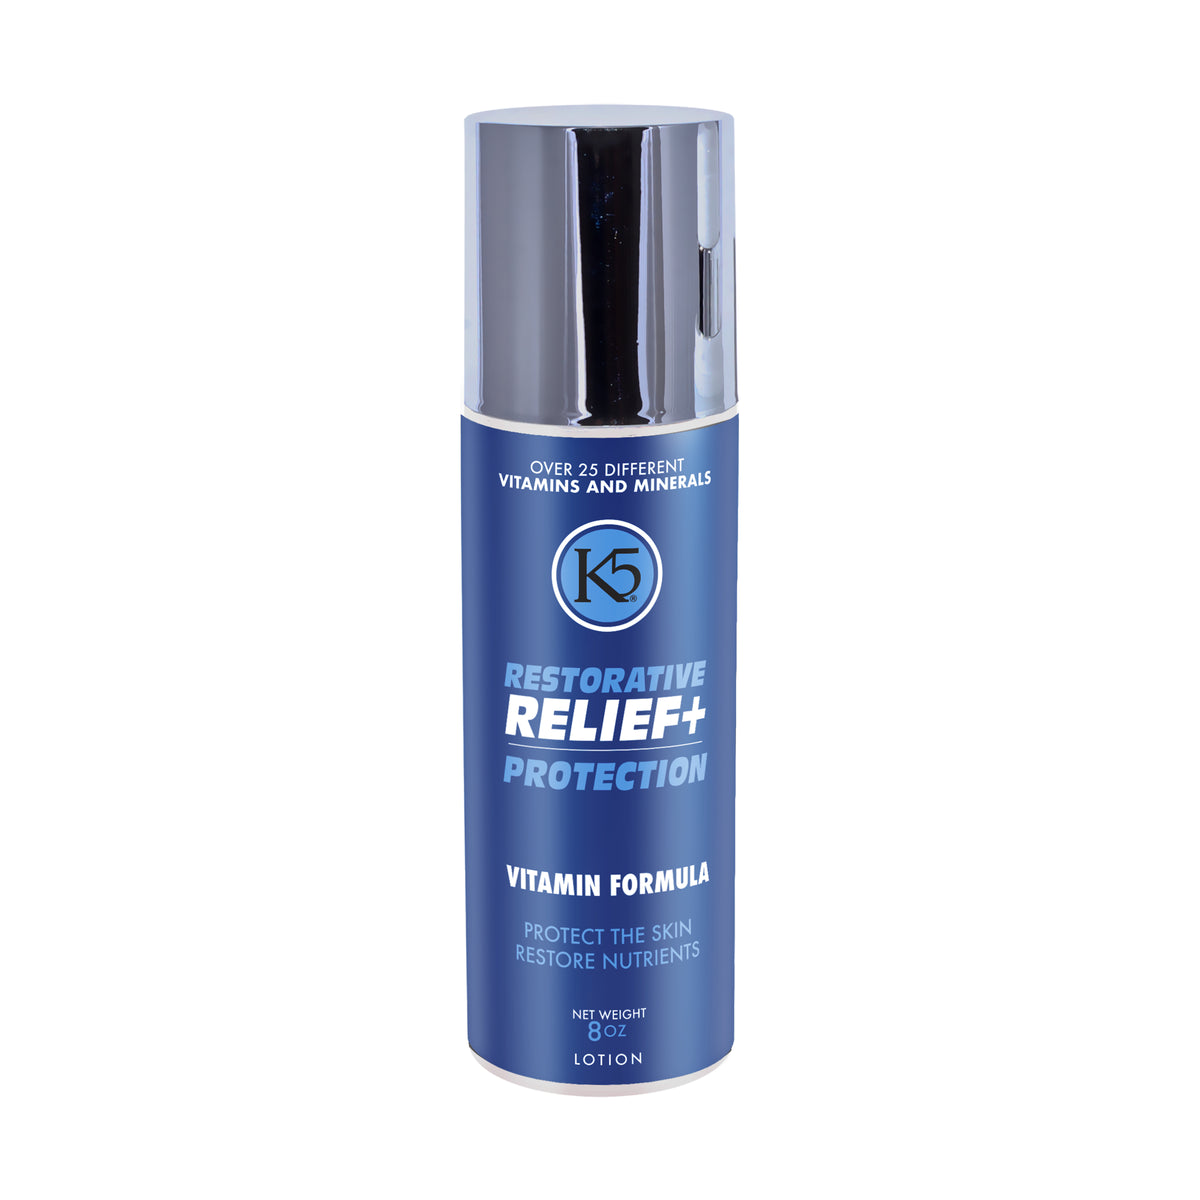 K5 Restorative Relief + Protection | 8oz lotion